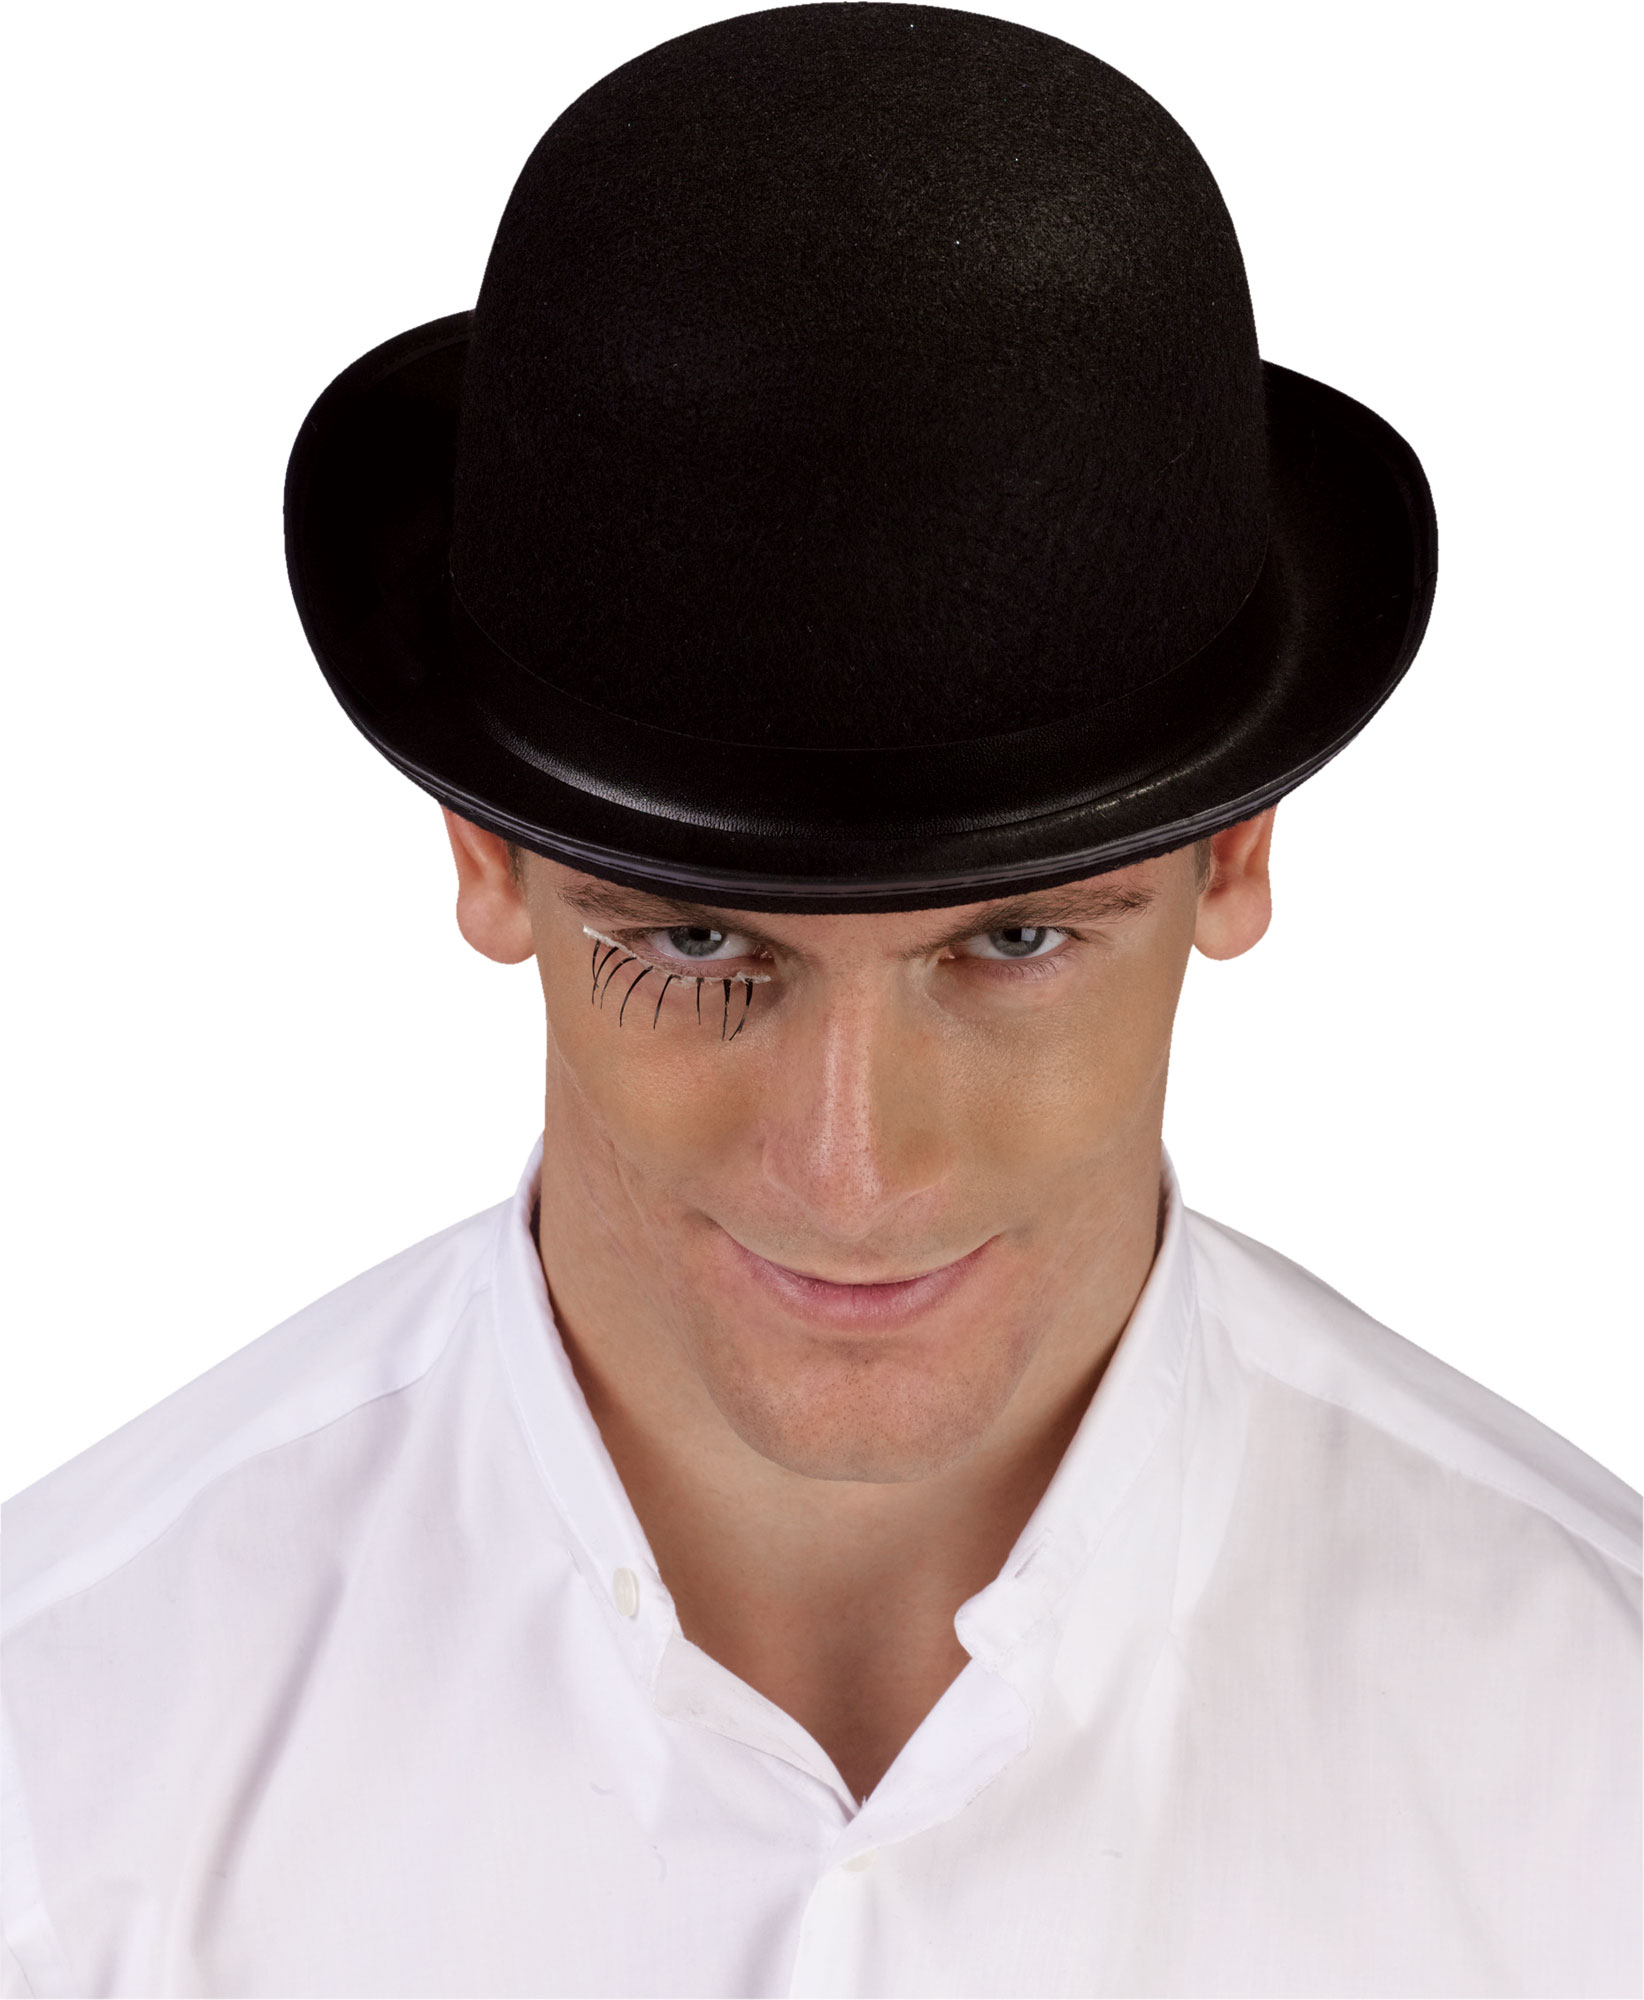 Шляпа мужская. Головной убор шляпа мужская. Мужчина в шляпе. Модные мужские шляпы. Муж шляпа